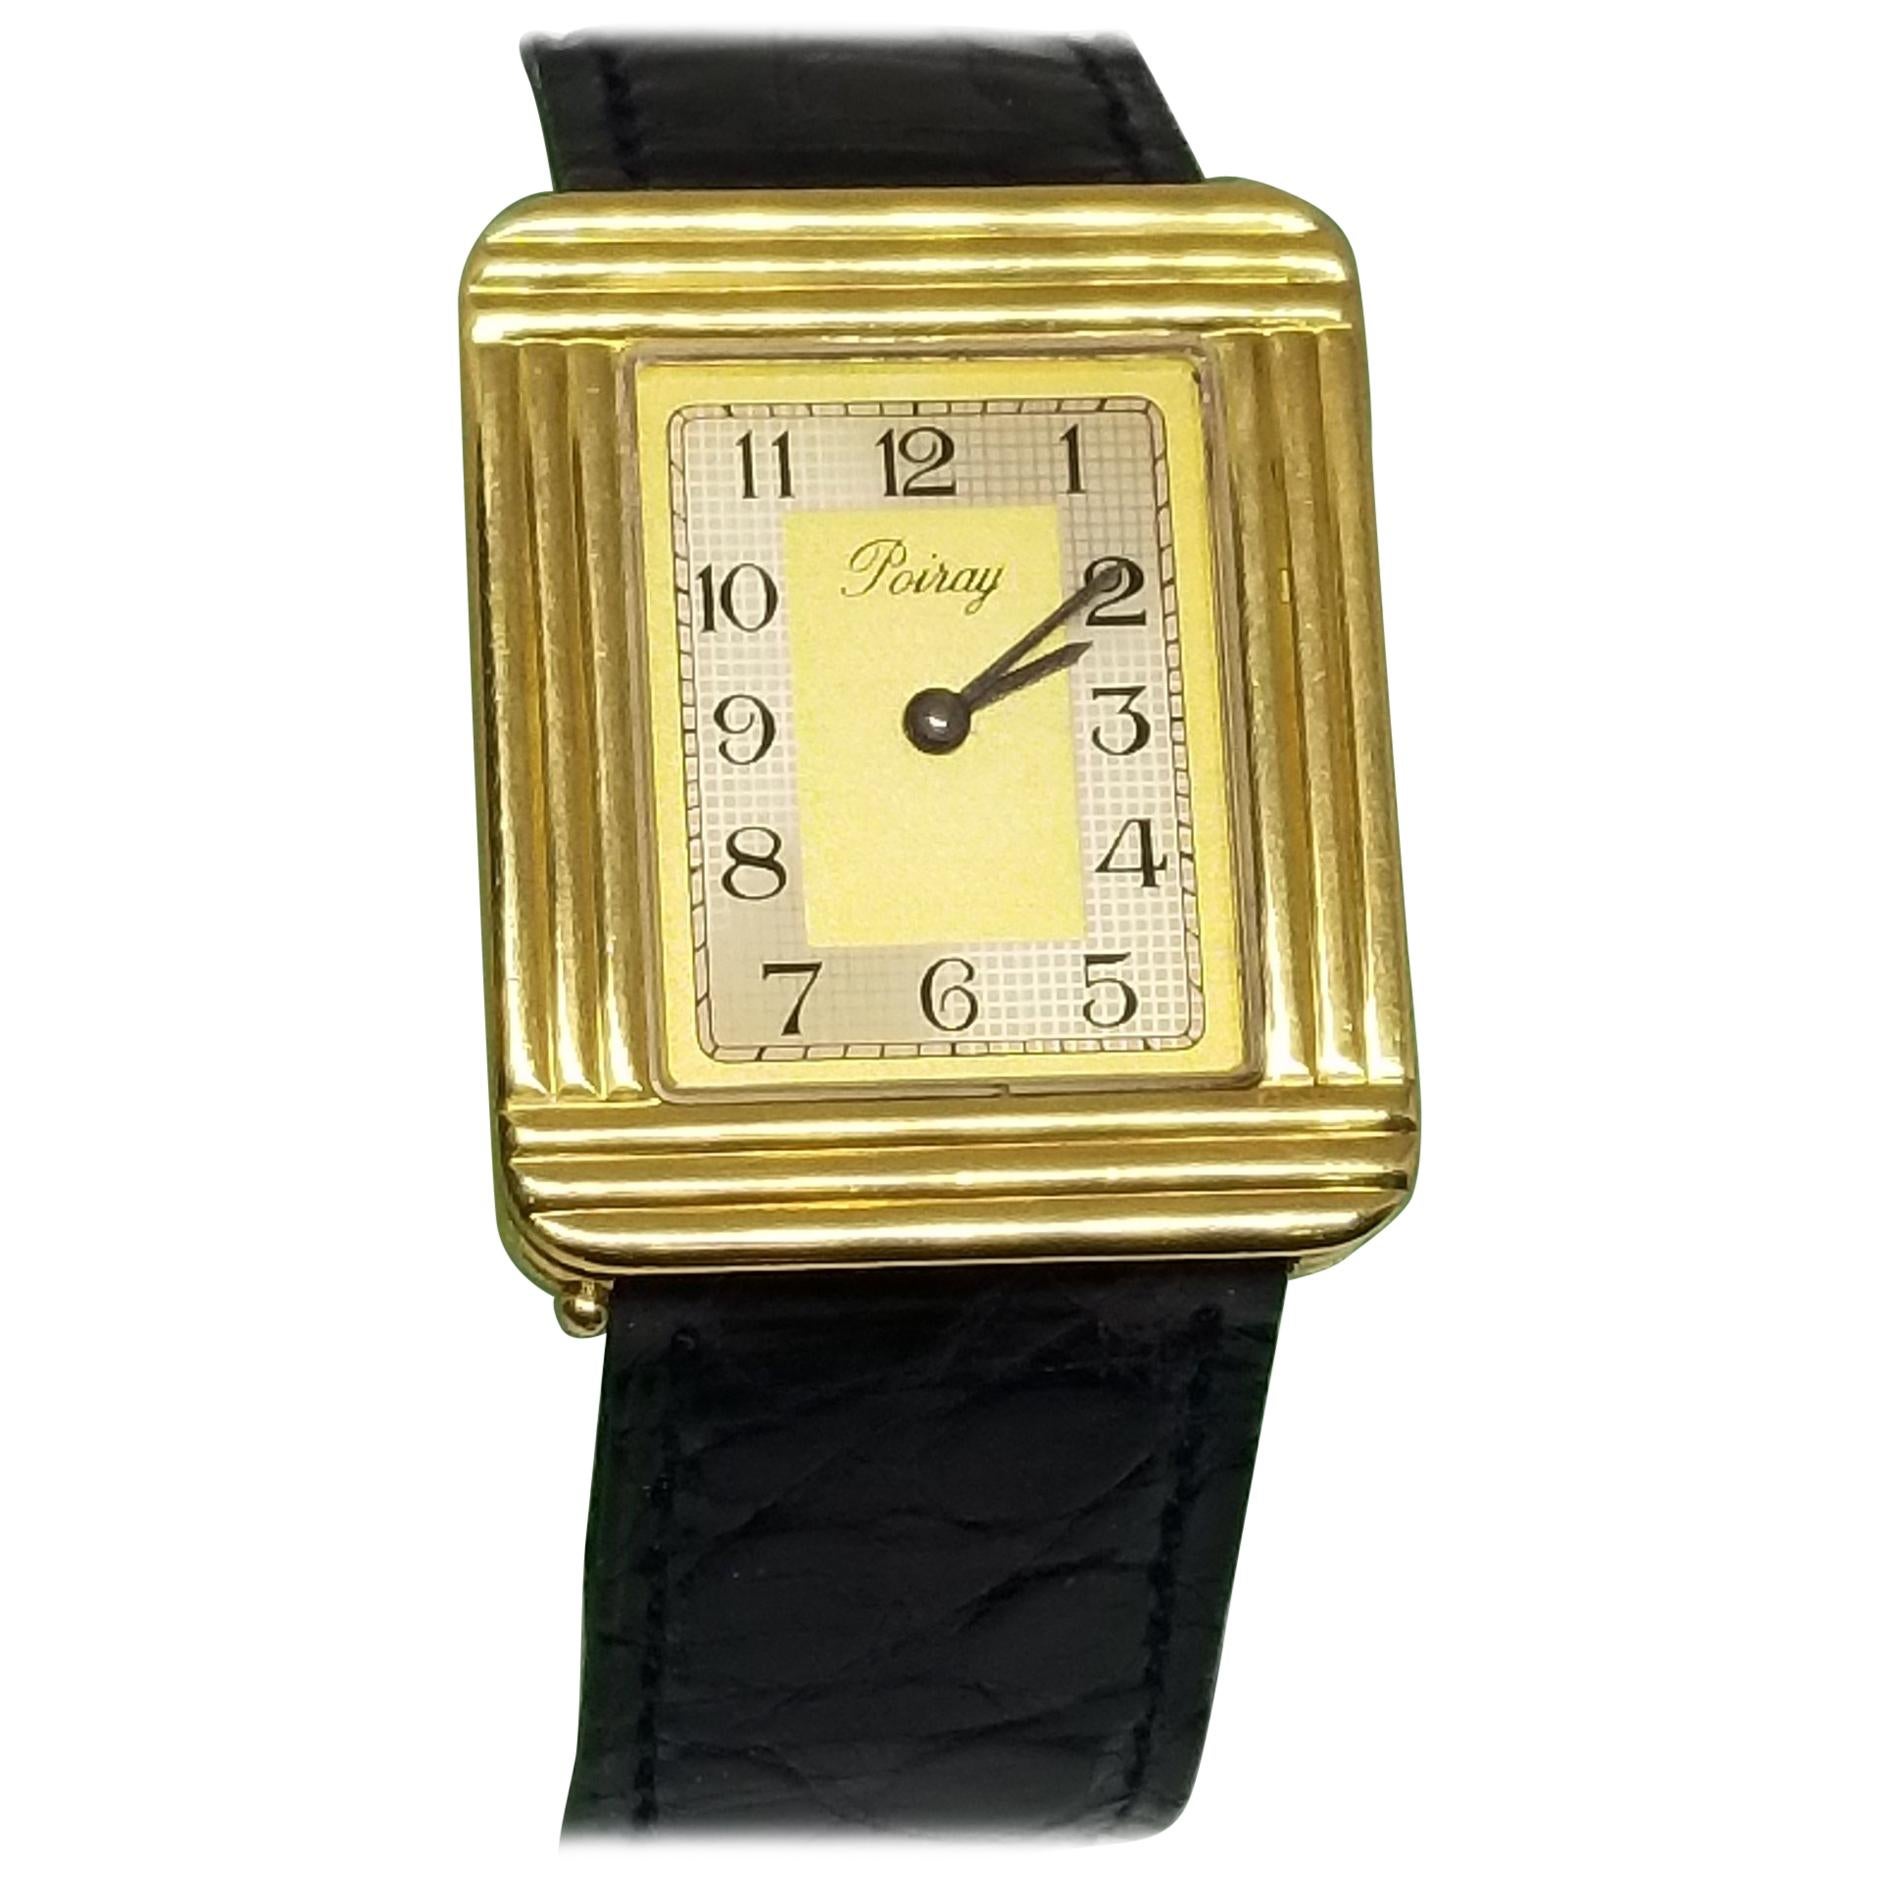 "Poiray" of France 18 Karat Yellow Gold Watch